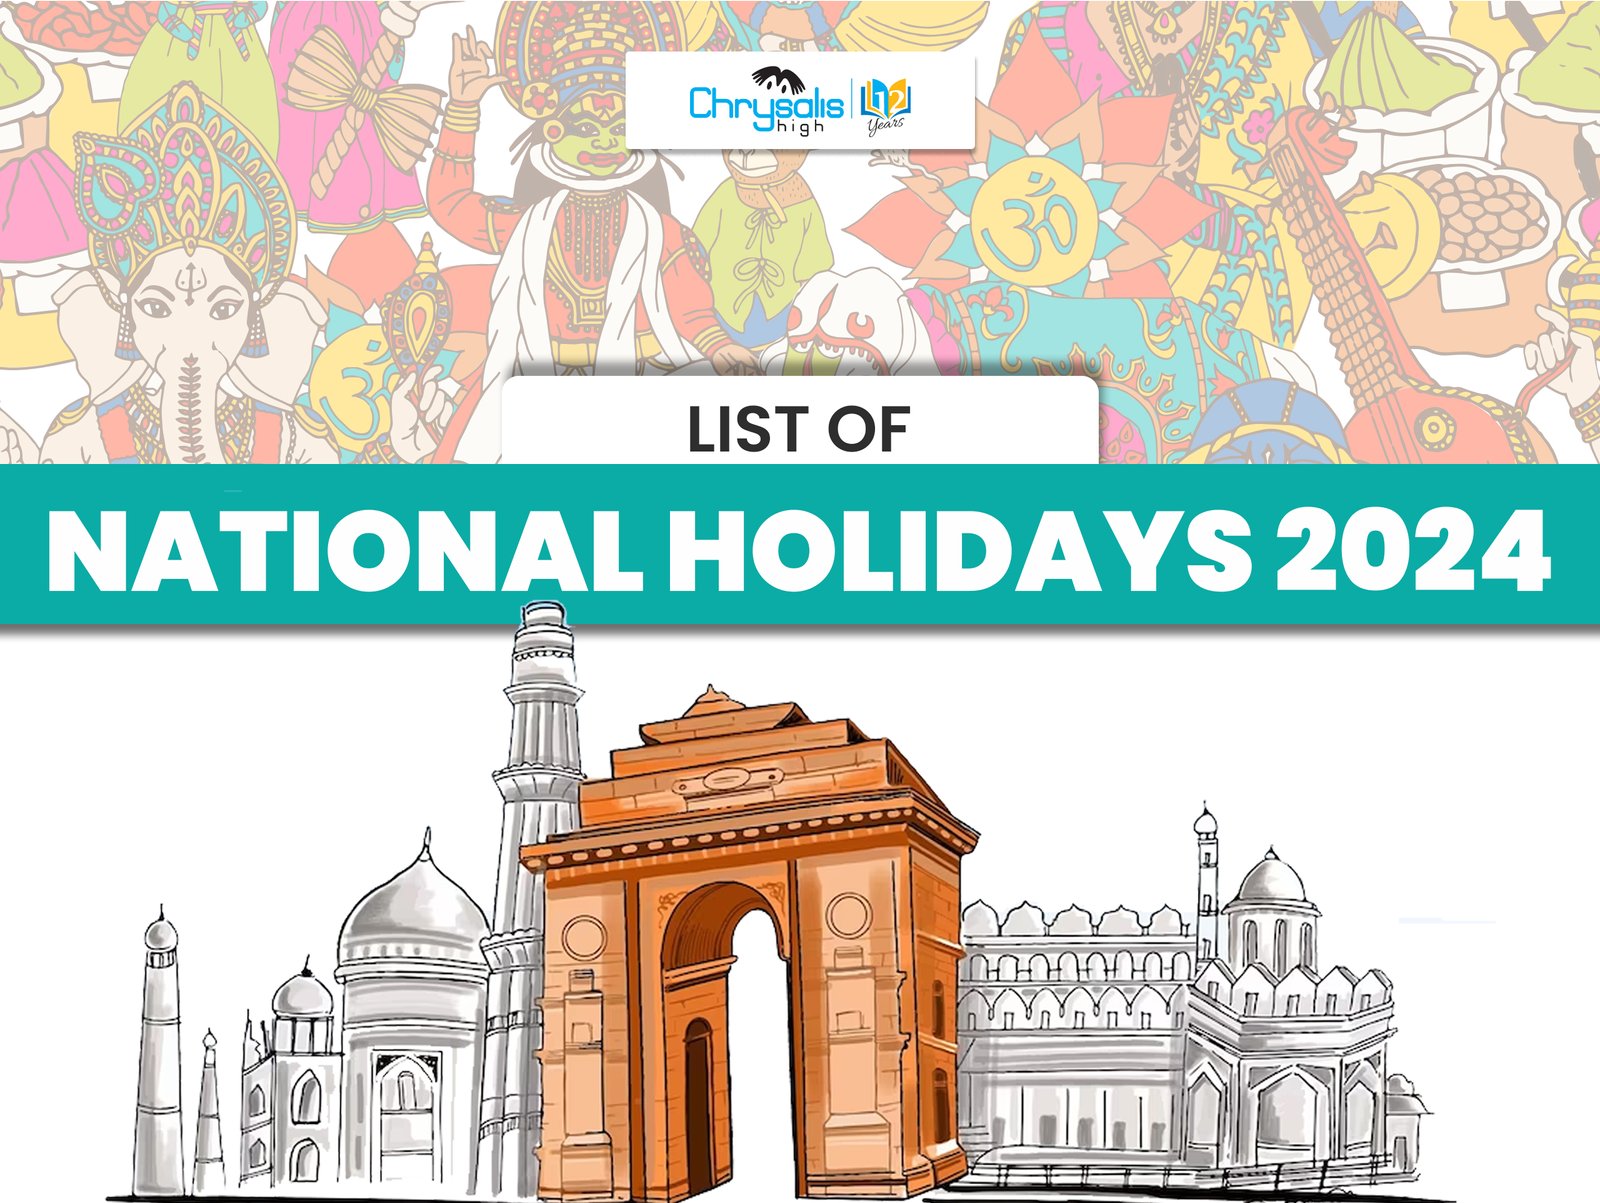 List of National holidays 2024